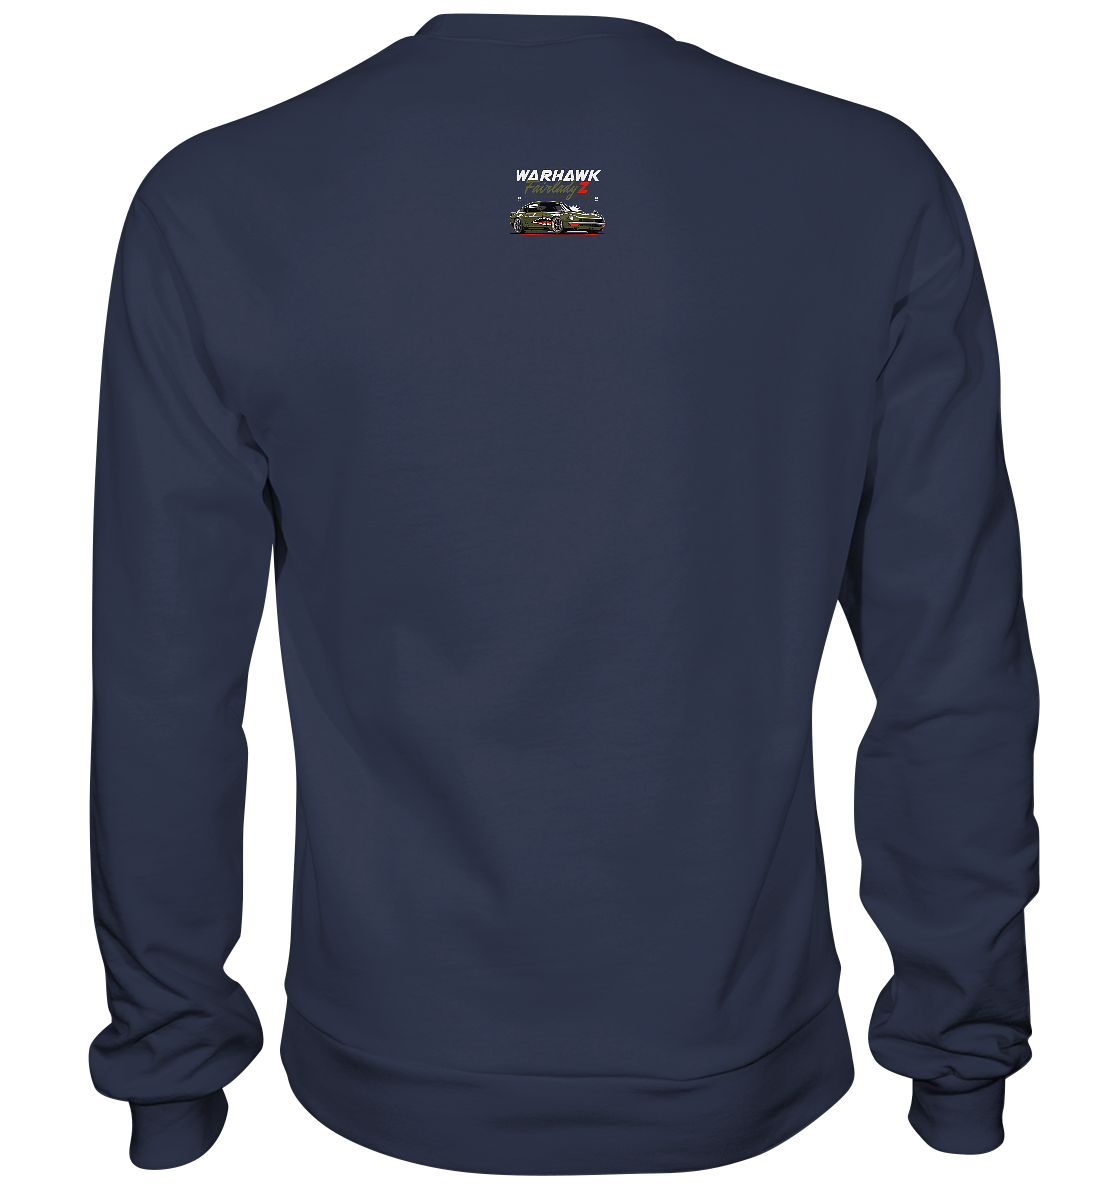 Warhawk 240Z - Premium Sweatshirt - MotoMerch.de